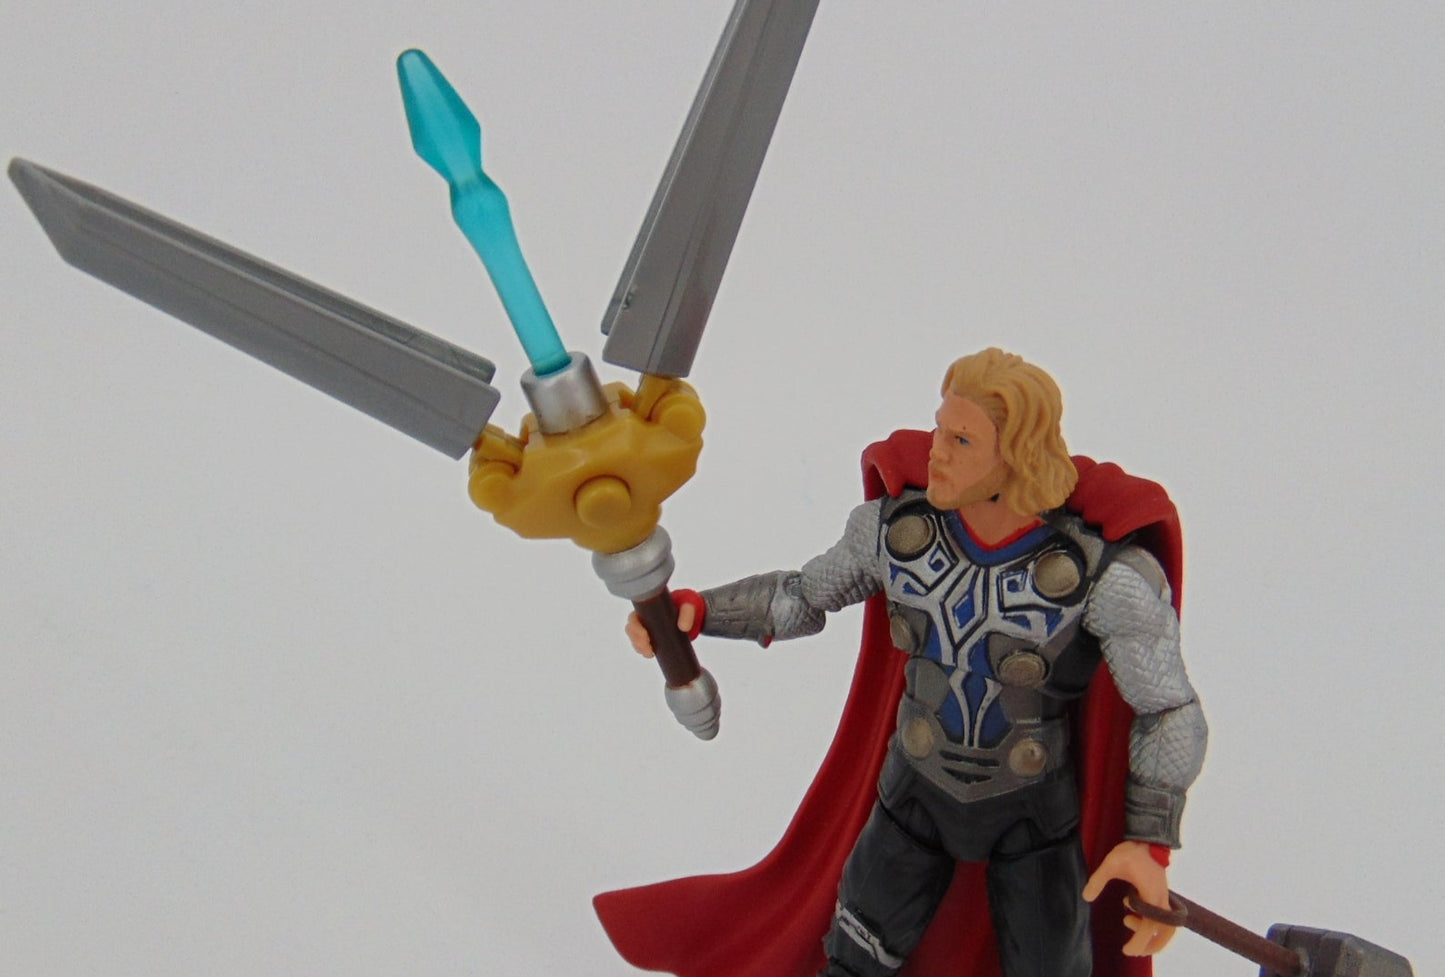 Sword Spike Thor - Hasbro 2010 3.75 (Complete)